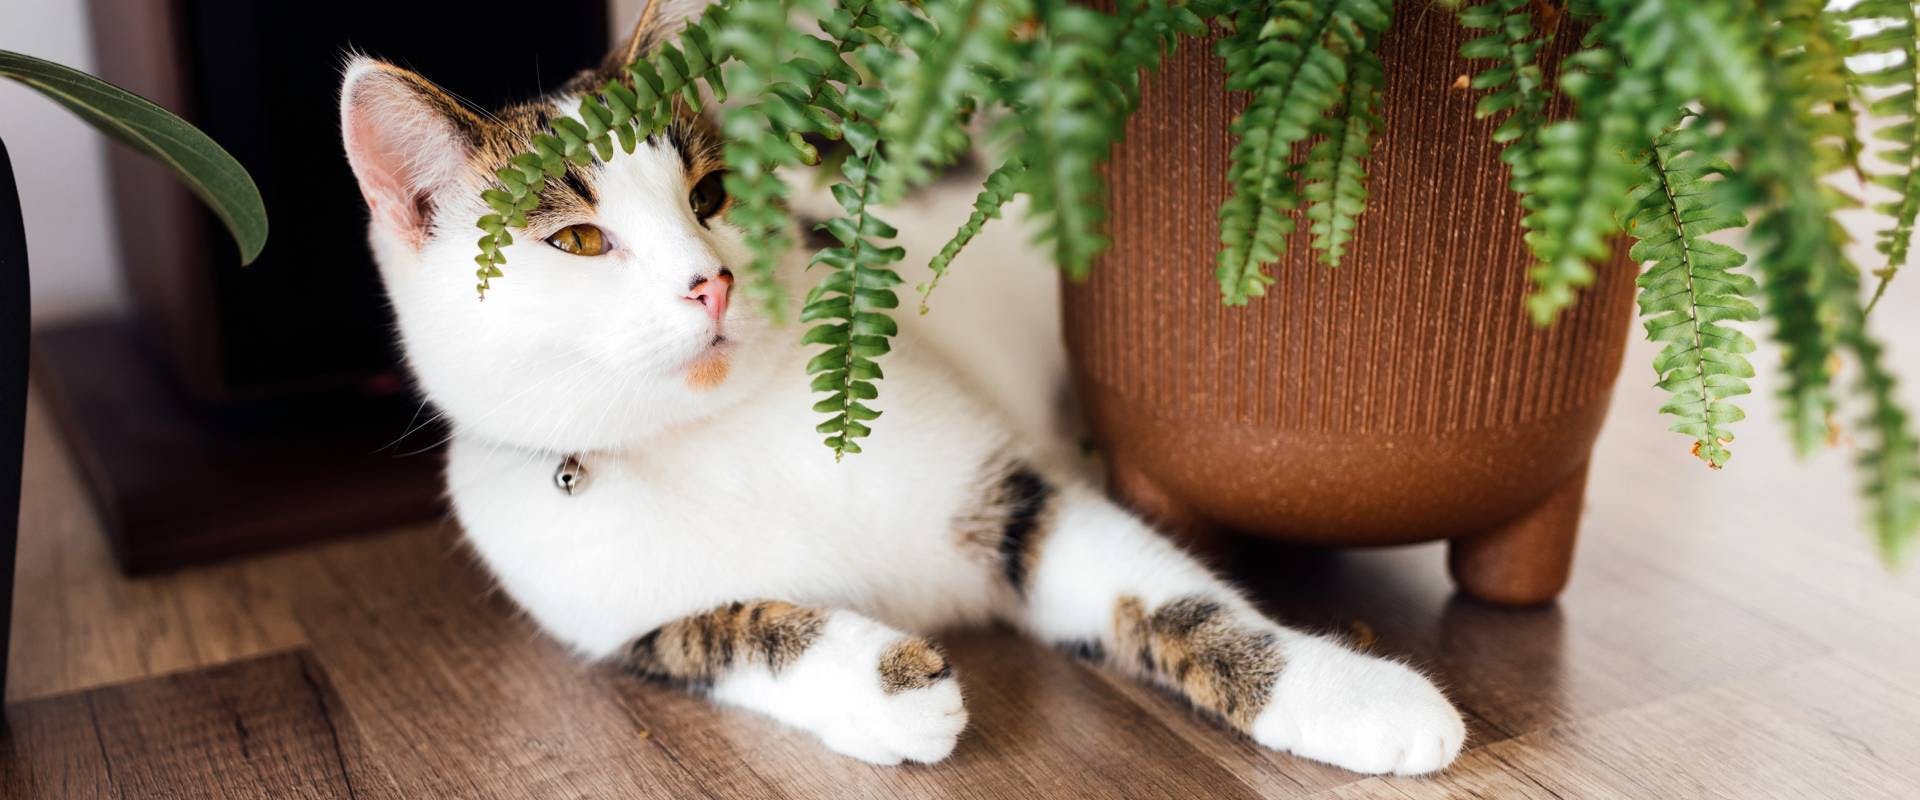 A cat beside some cat safe ferns.